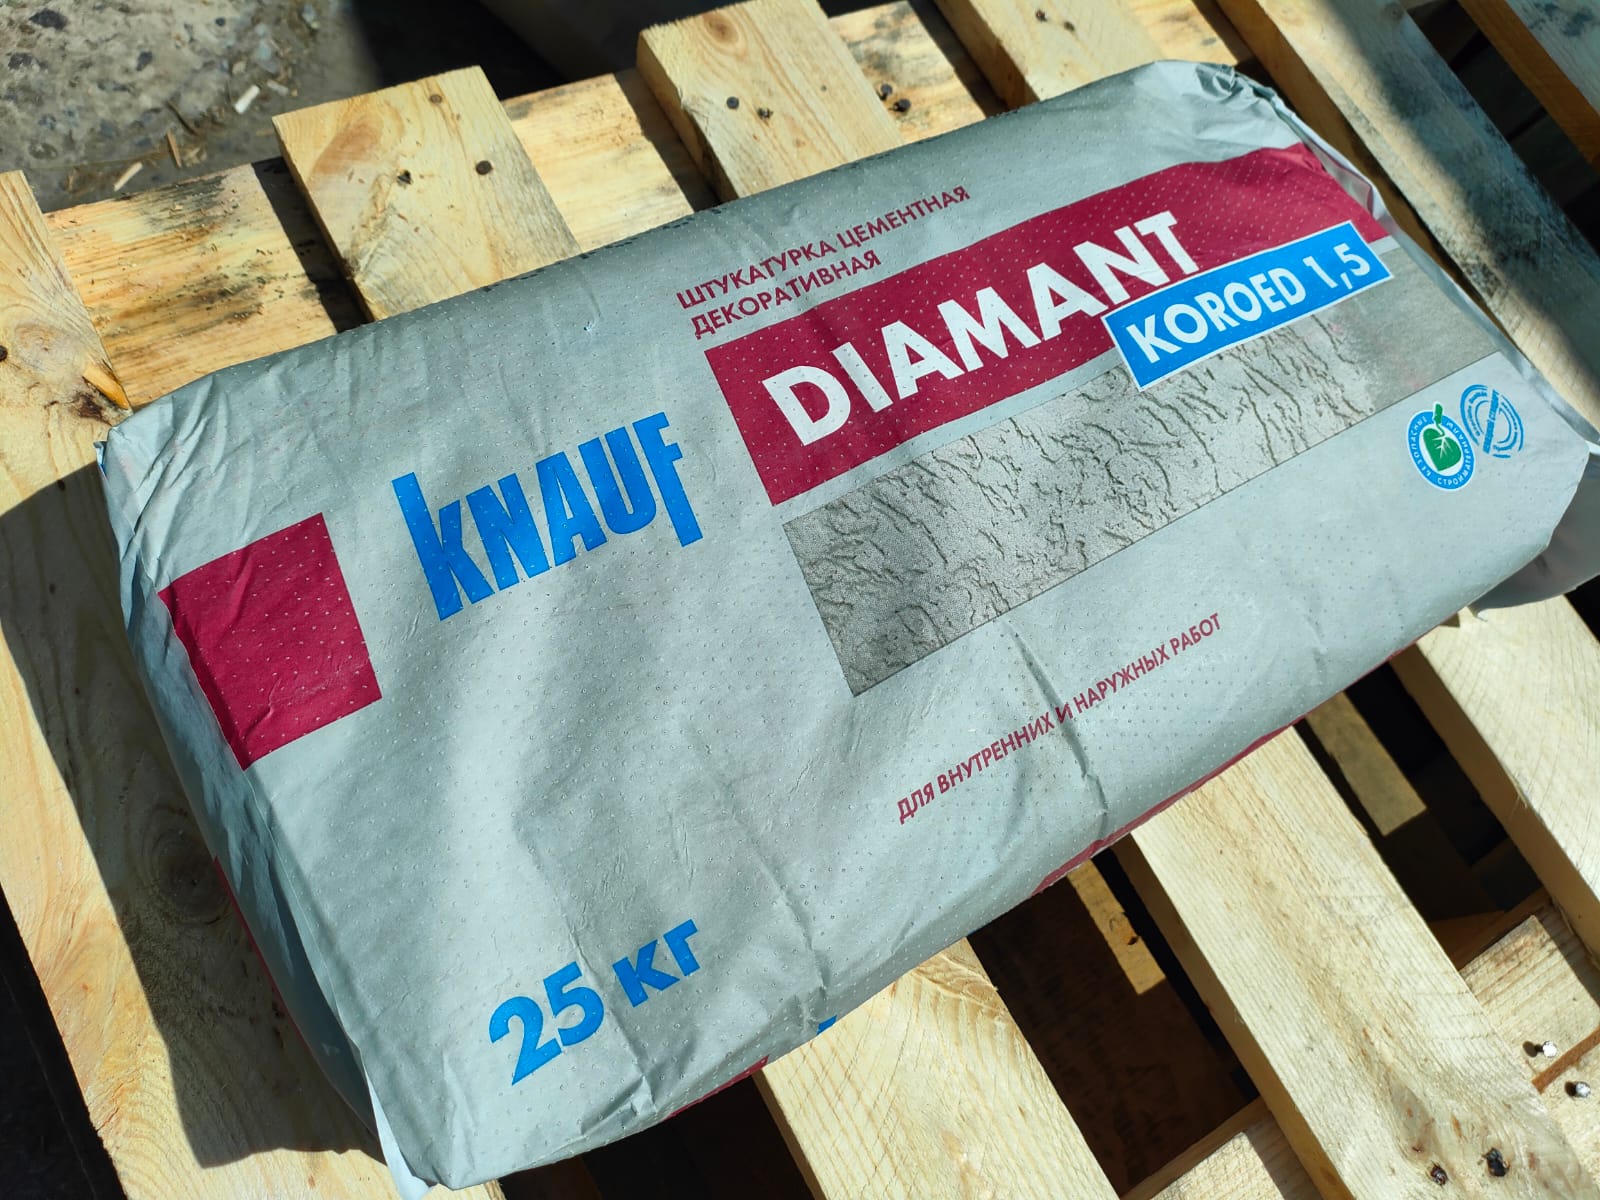 Цементная декоративная штукатурка КНАУФ-Диамант Короед 1,5 25 кг								